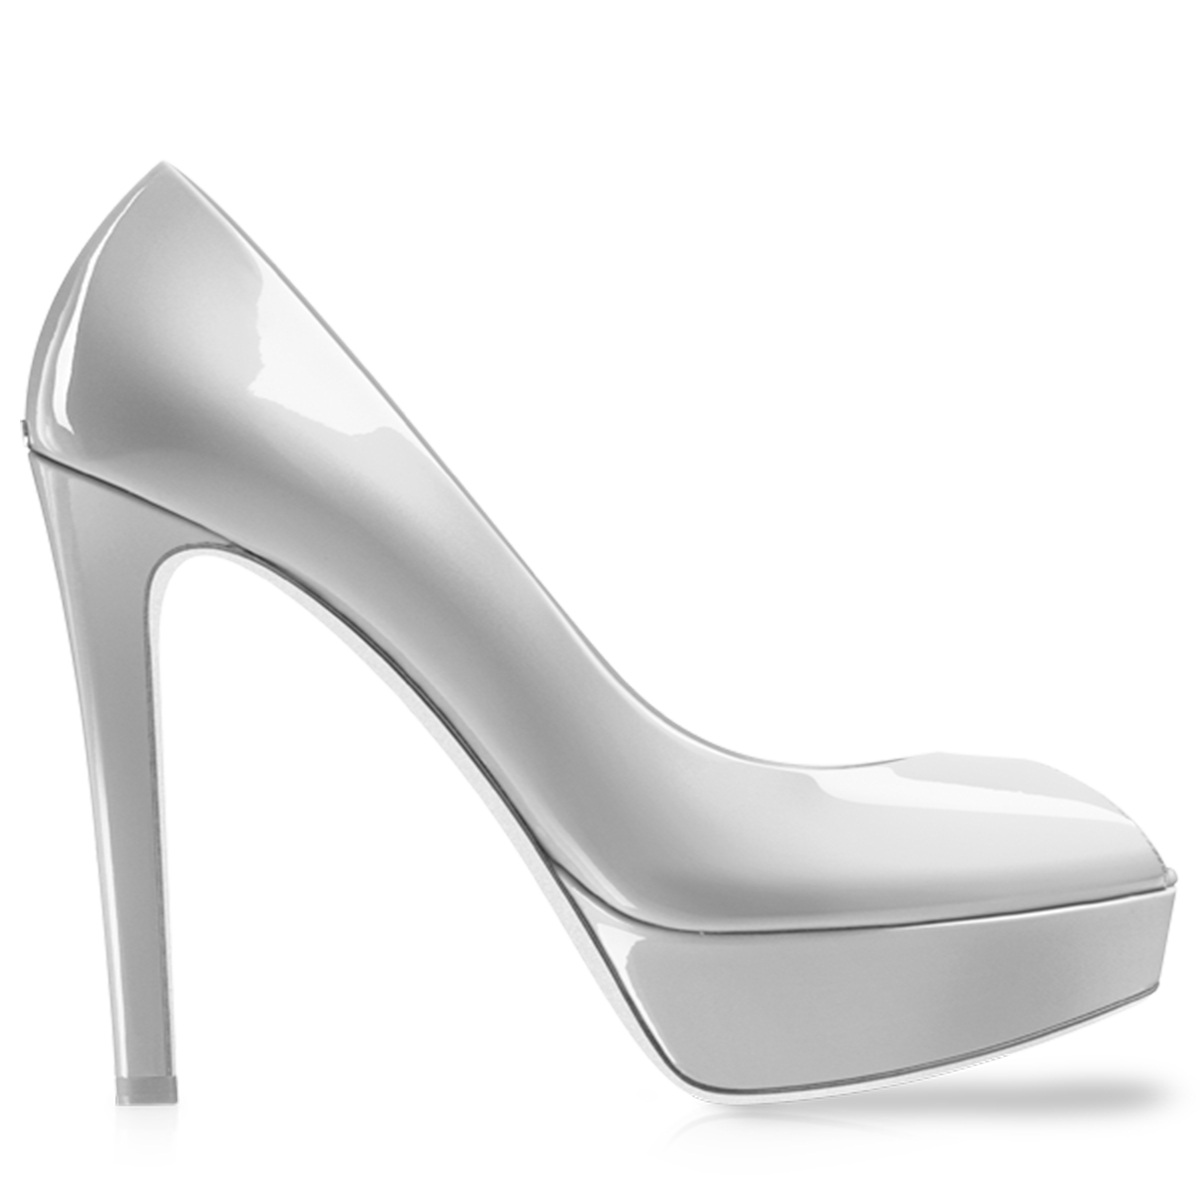 Обувь на белом фоне